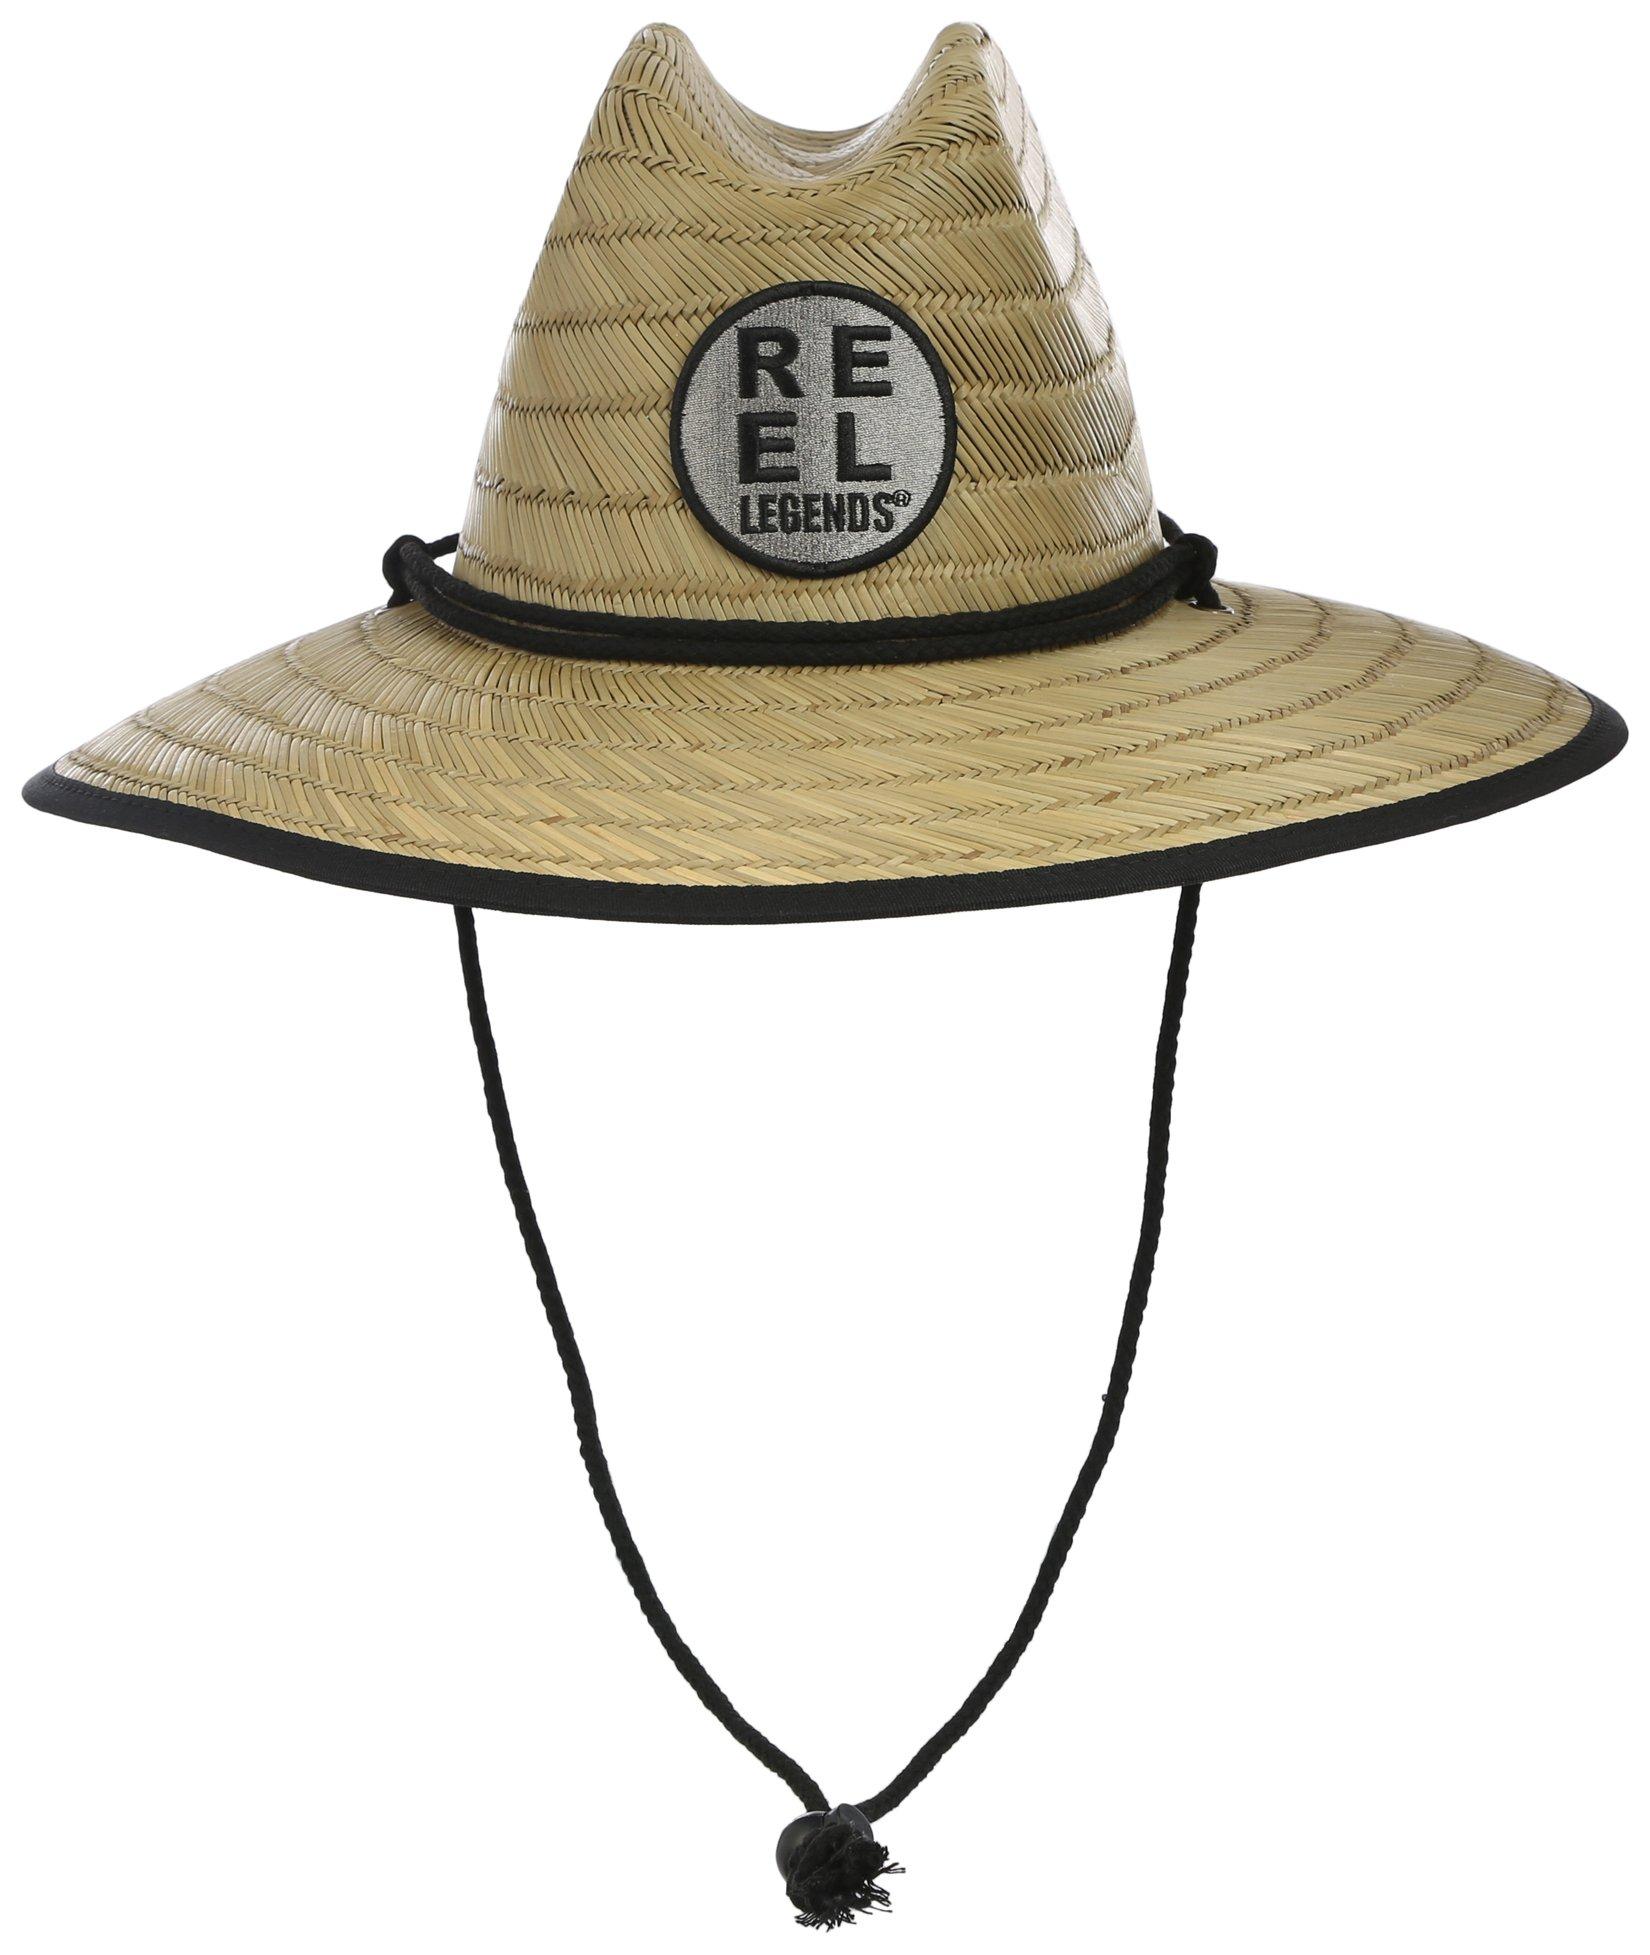 Reel Legends Boys Great White Lifeguard Hat